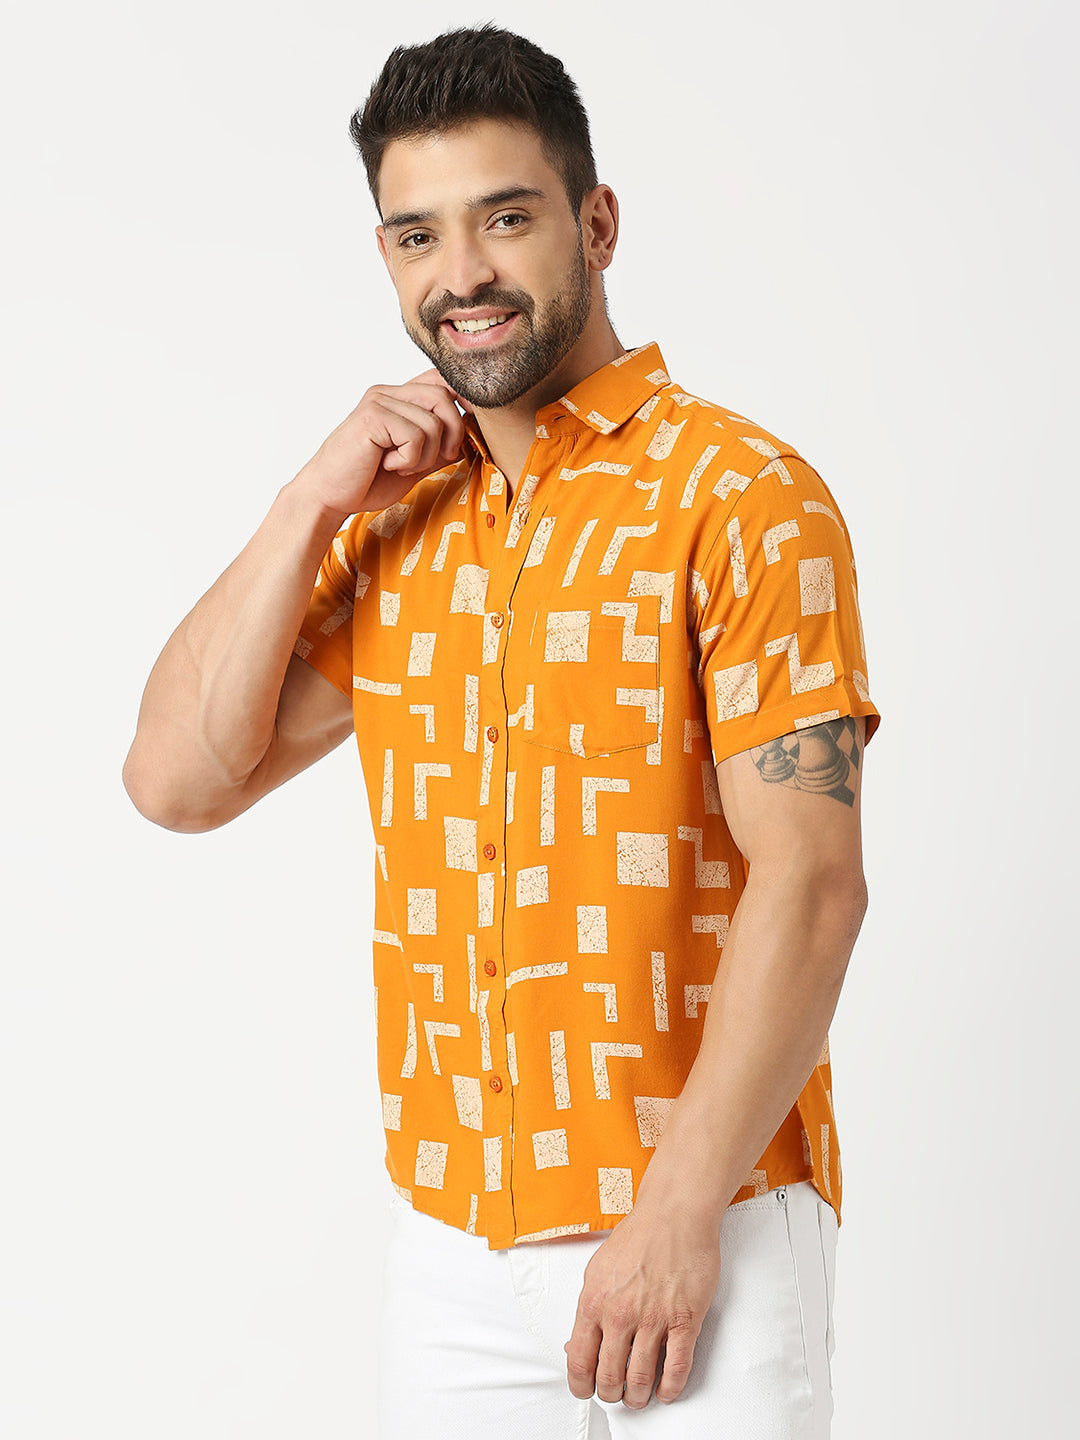 Blocky Abstract Orange Shirt